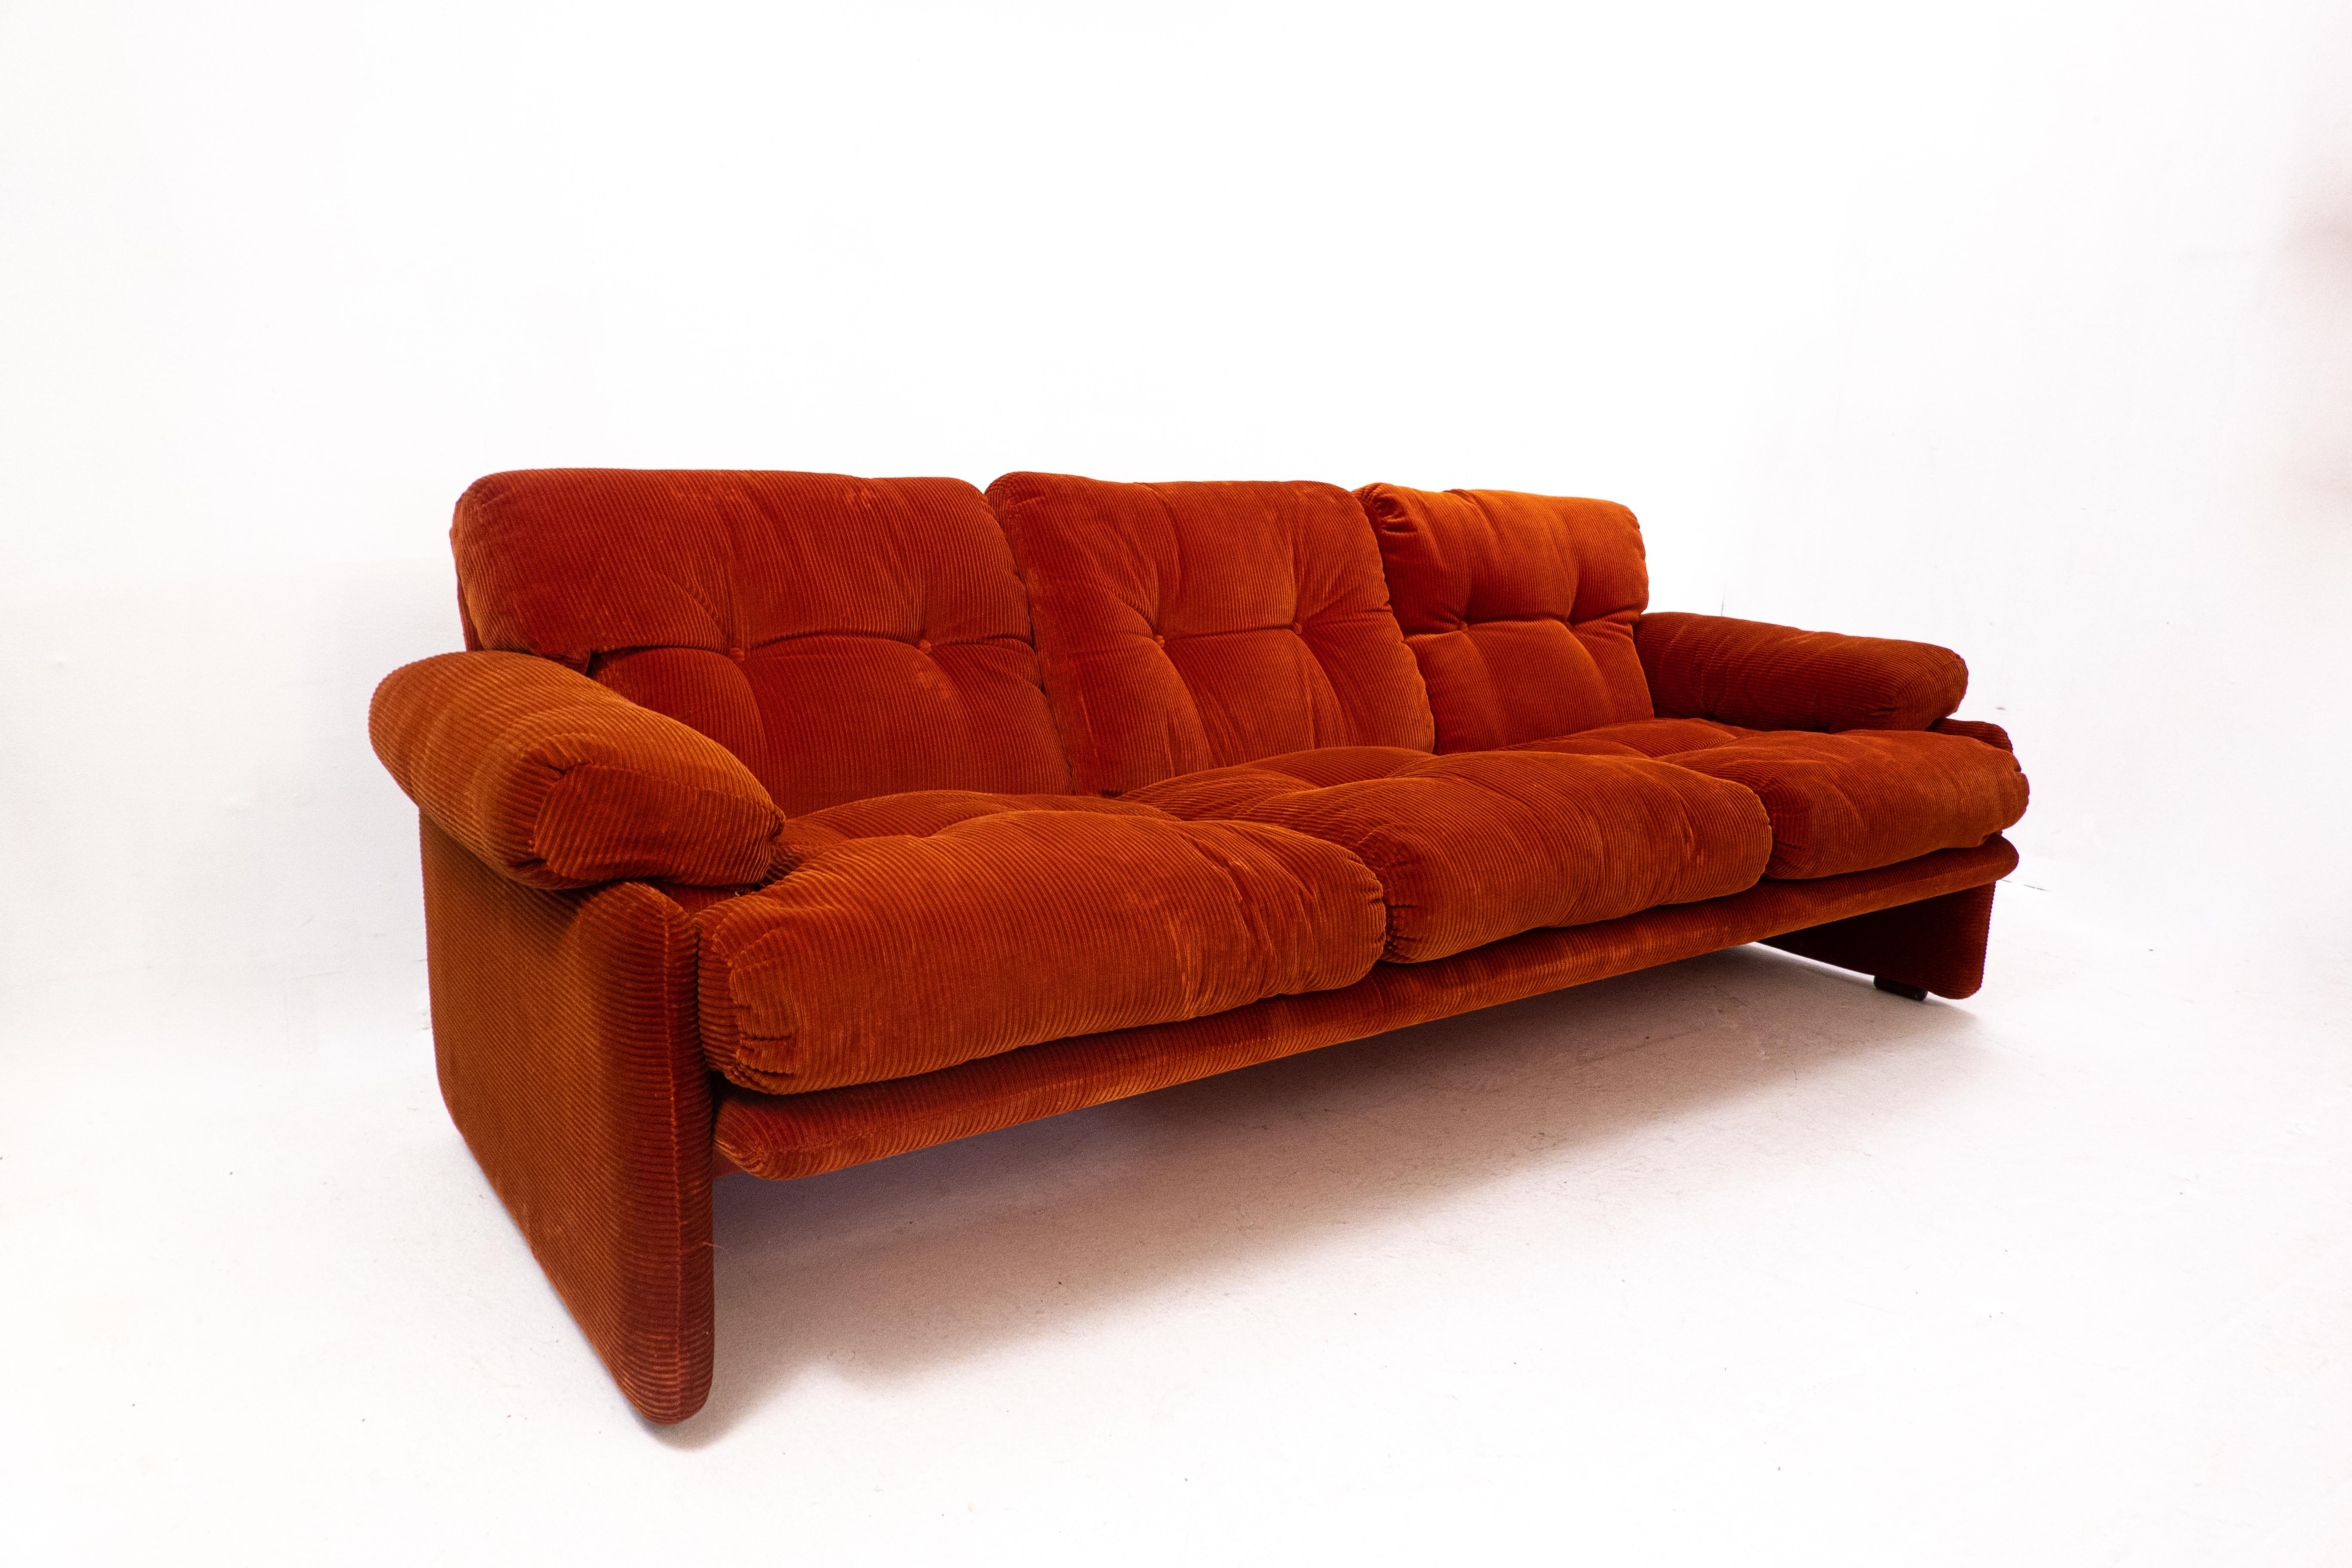 Coronado three-seat sofa by Tobia Scarpa for B&B Italia, 1960s
Orange velvet (original).